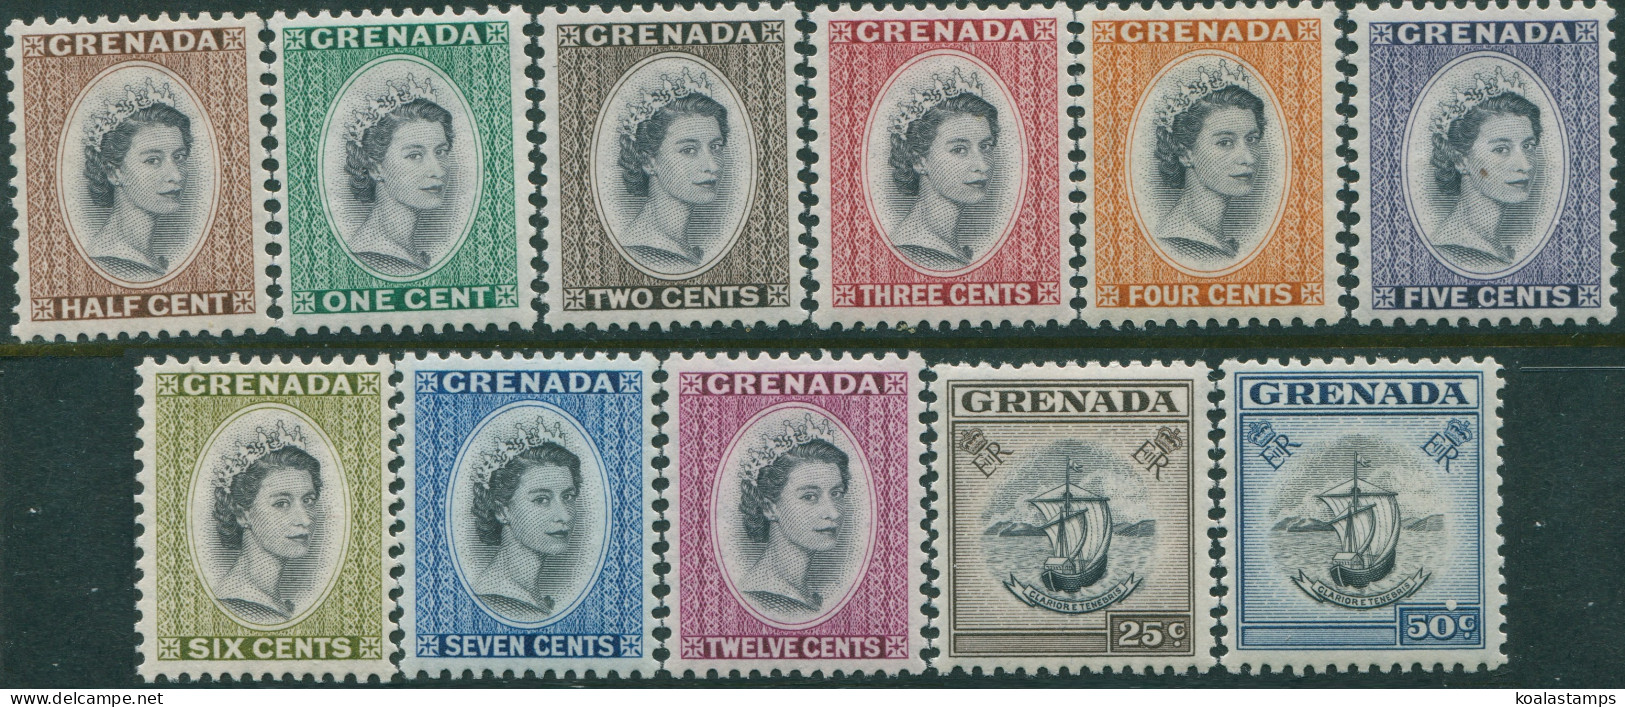 Grenada 1953 SG192-202 QEII And Ships (11) MLH - Grenada (1974-...)